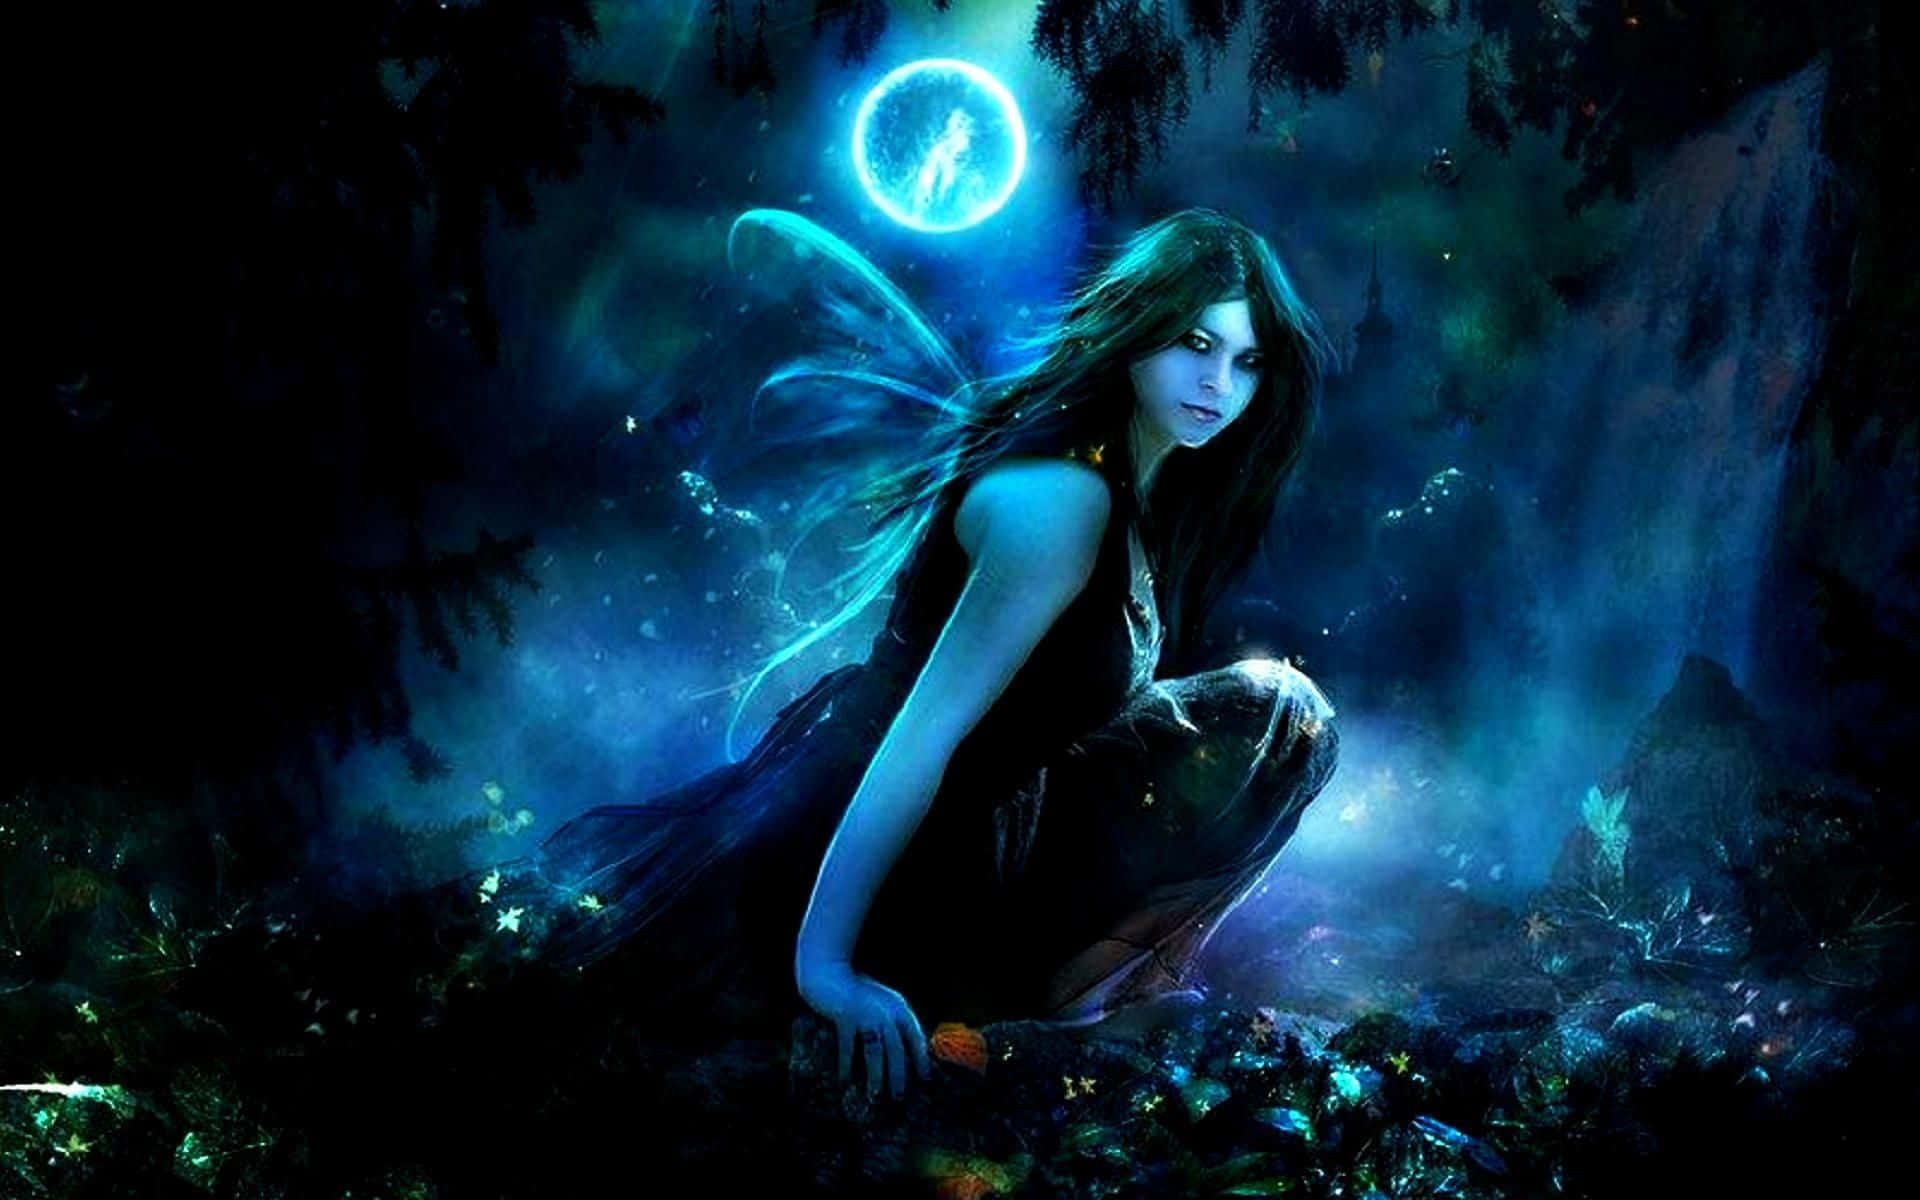 "An Evil Fairy Lurks in the Dark" Wallpaper